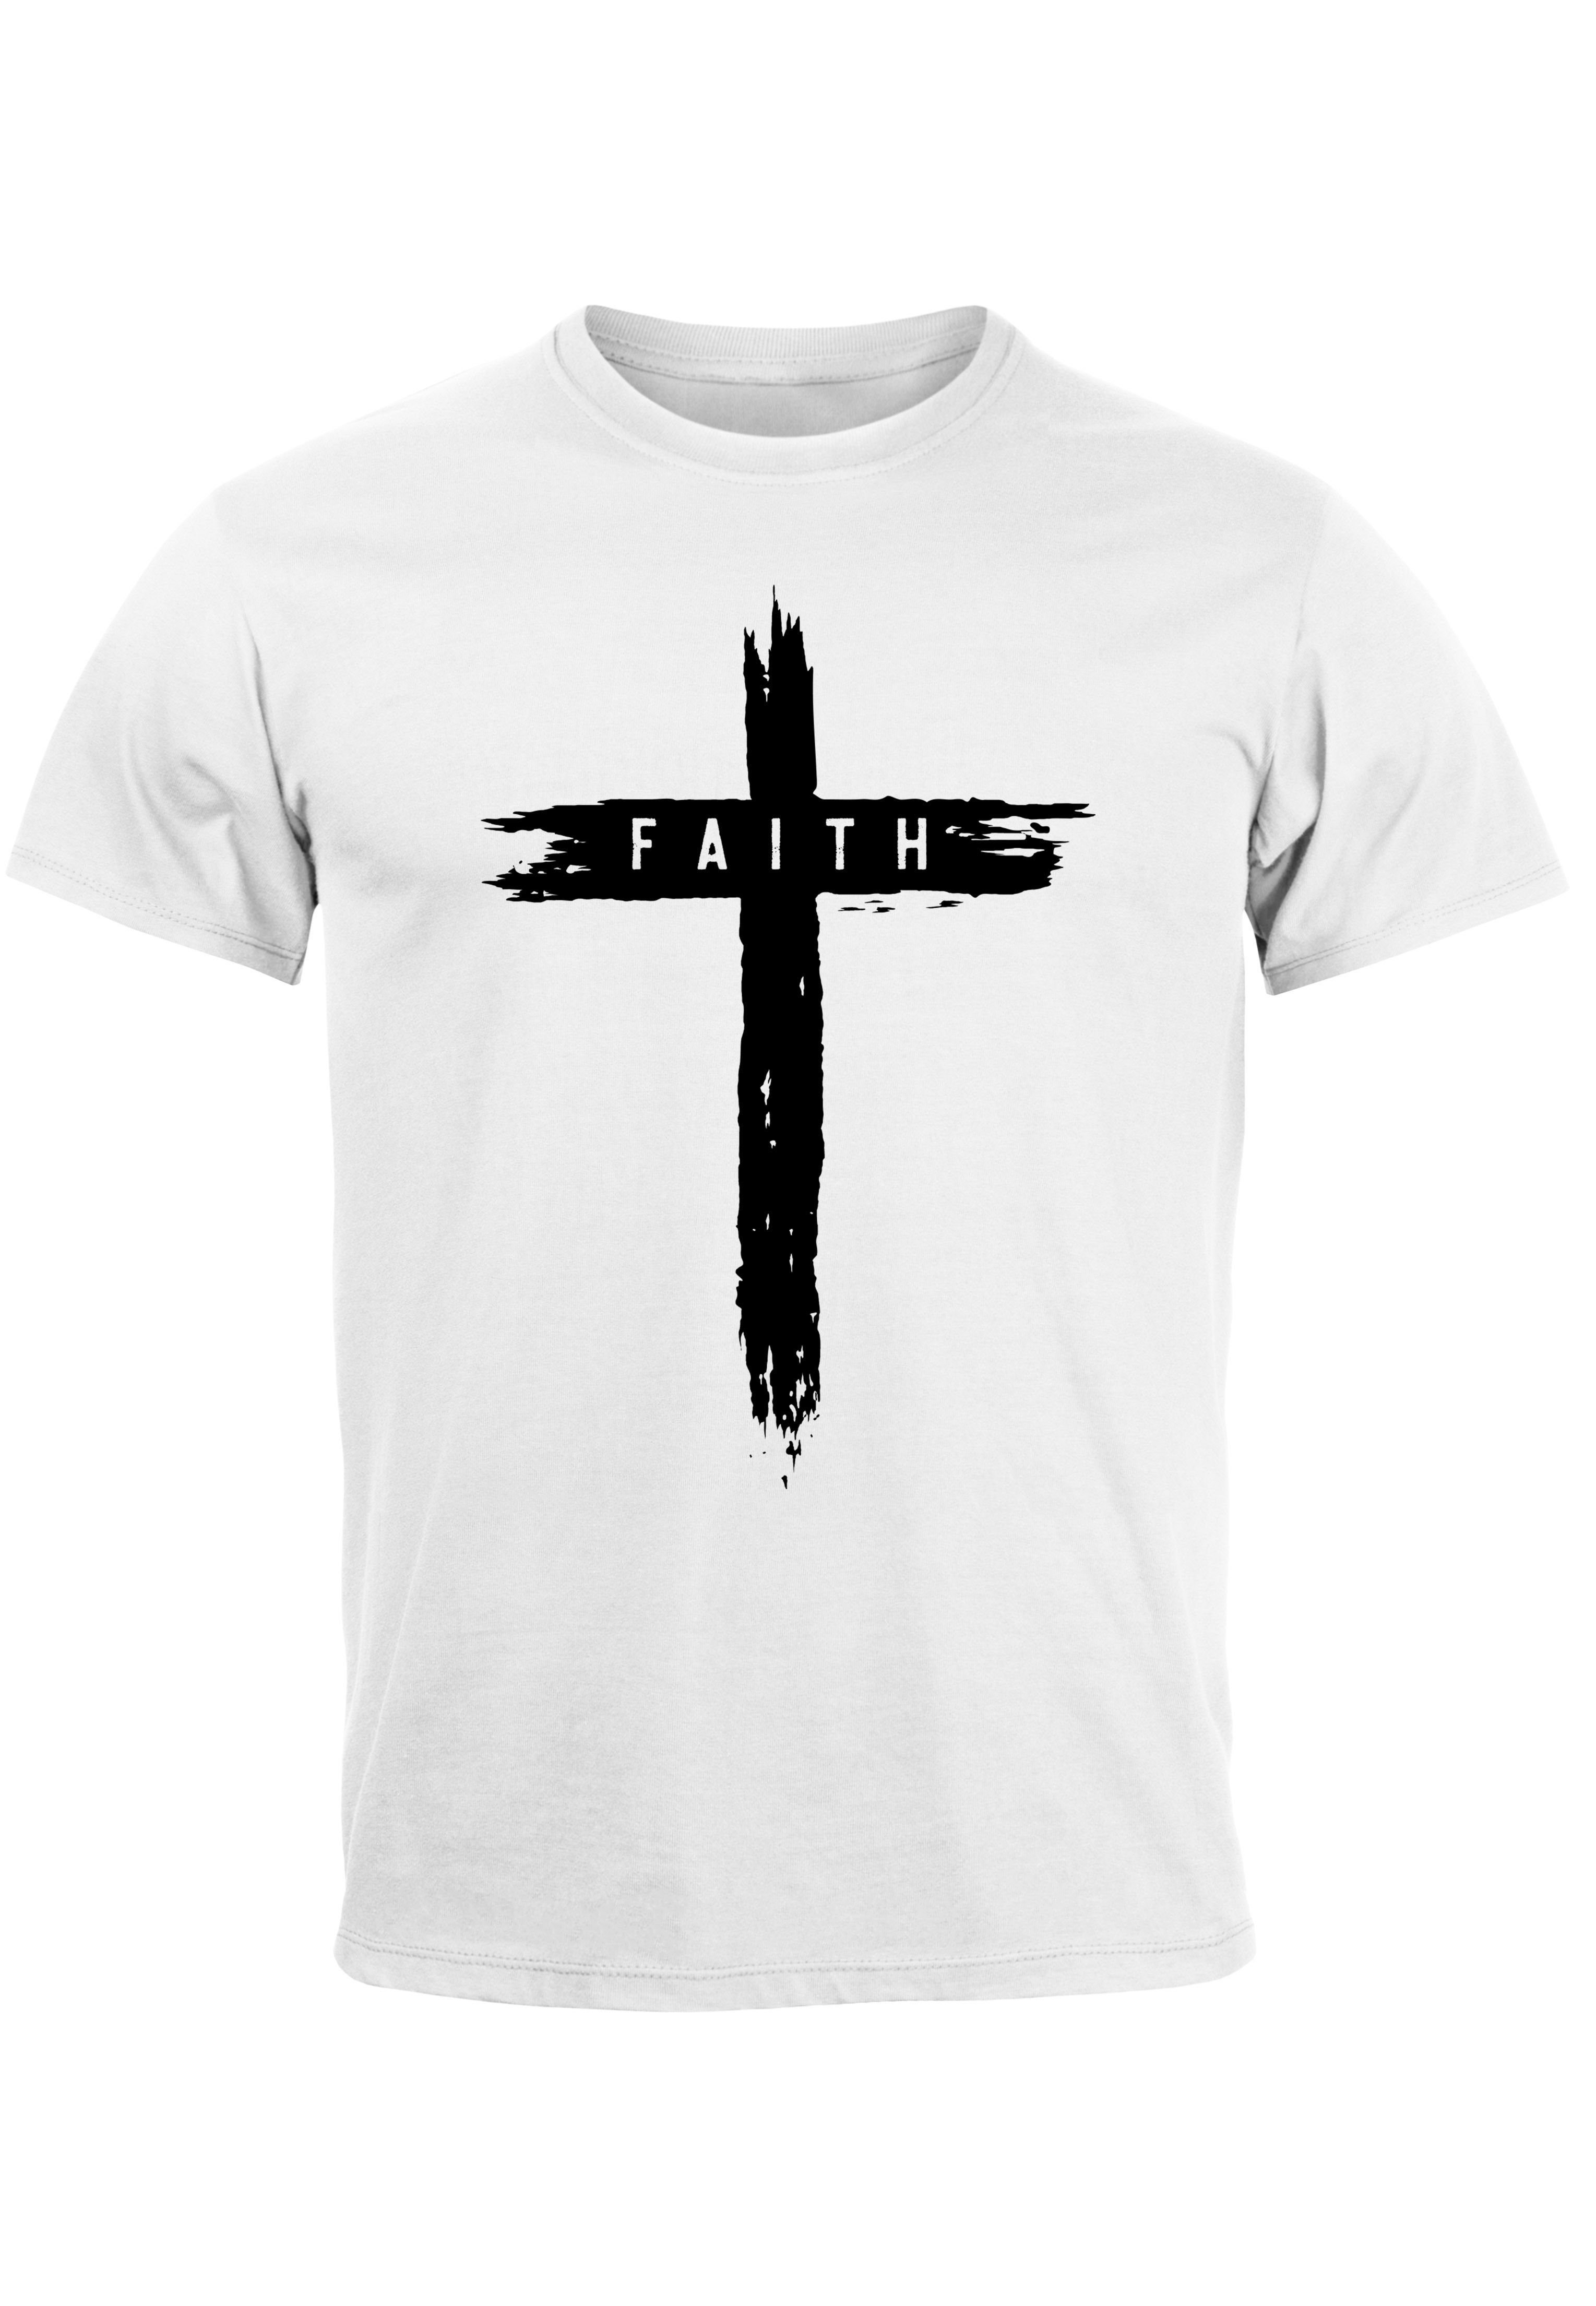 Neverless Print-Shirt Herren T-Shirt Printshirt Aufdruck Kreuz Cross Faith Glaube Trend-Moti mit Print weiß